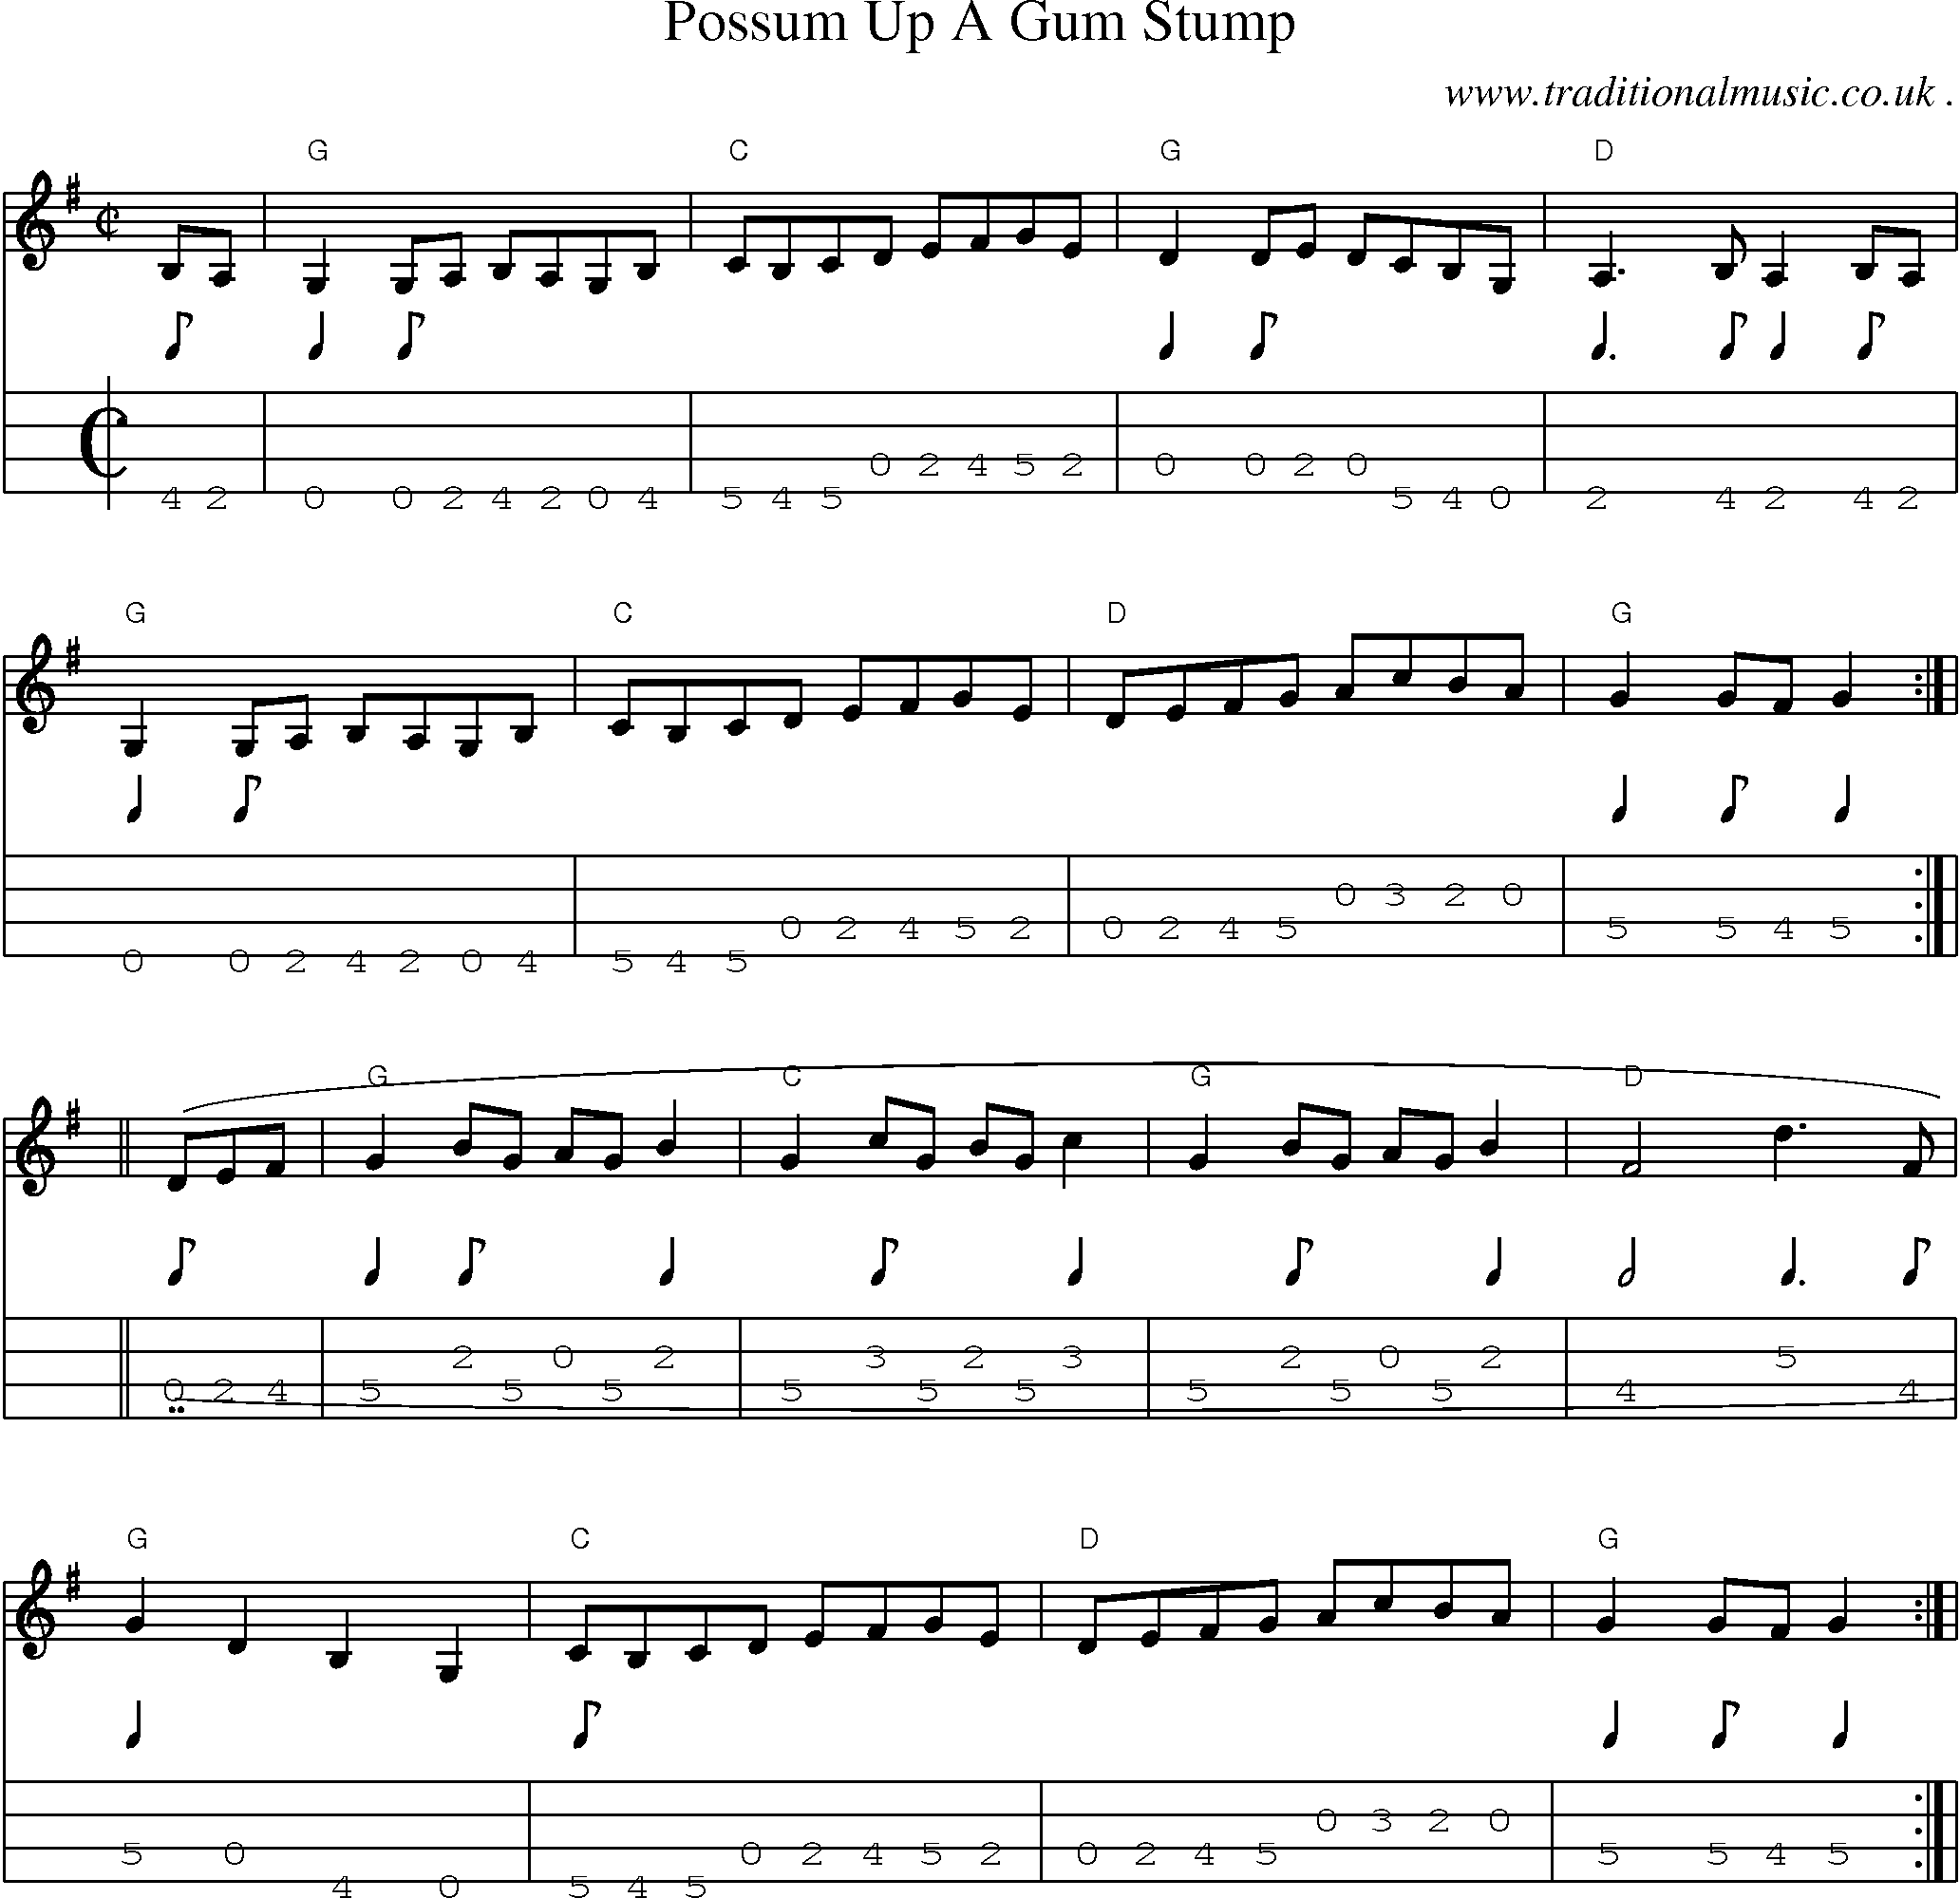 Sheet-music  score, Chords and Mandolin Tabs for Possum Up A Gum Stump